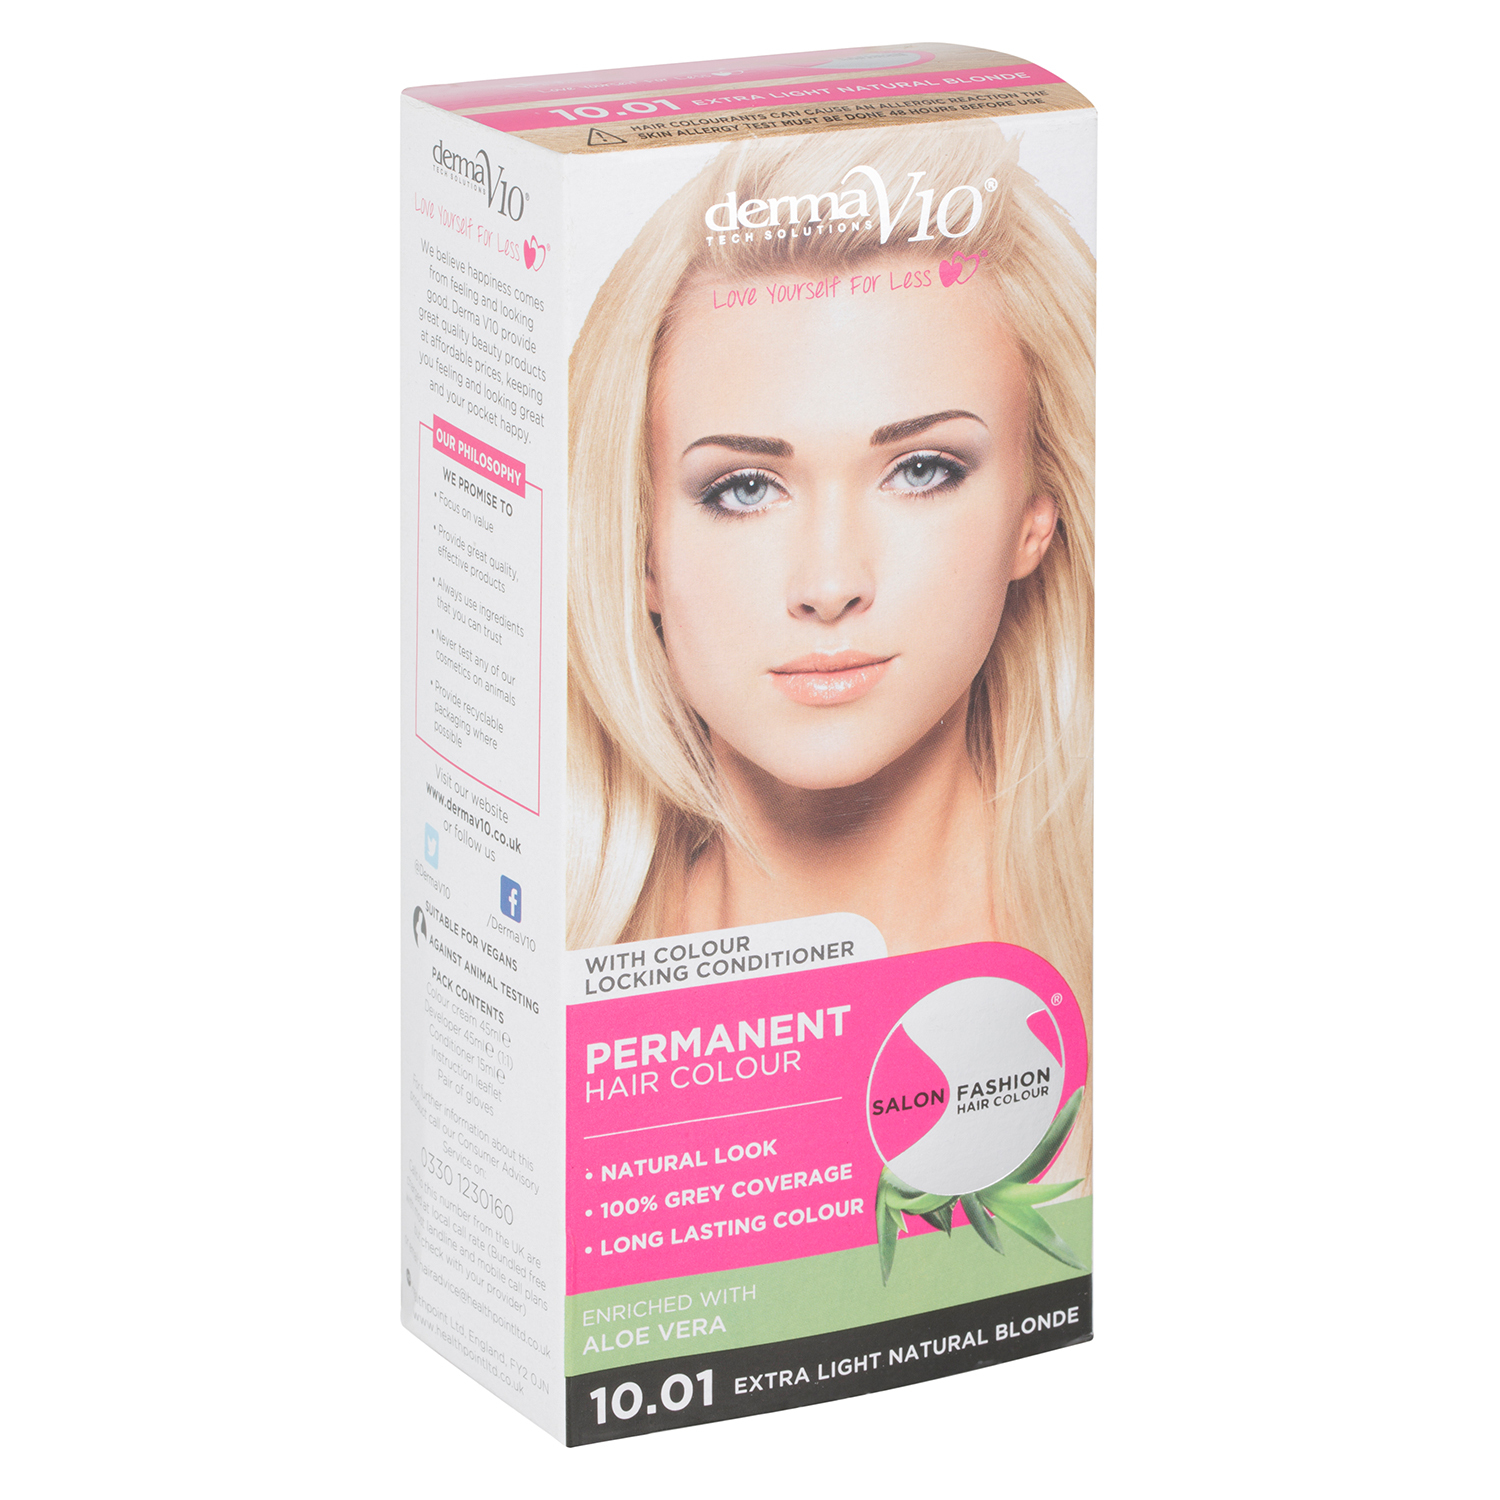 DermaV10 Salon Fashion Natural Blonde Permanent Hair Dye Image